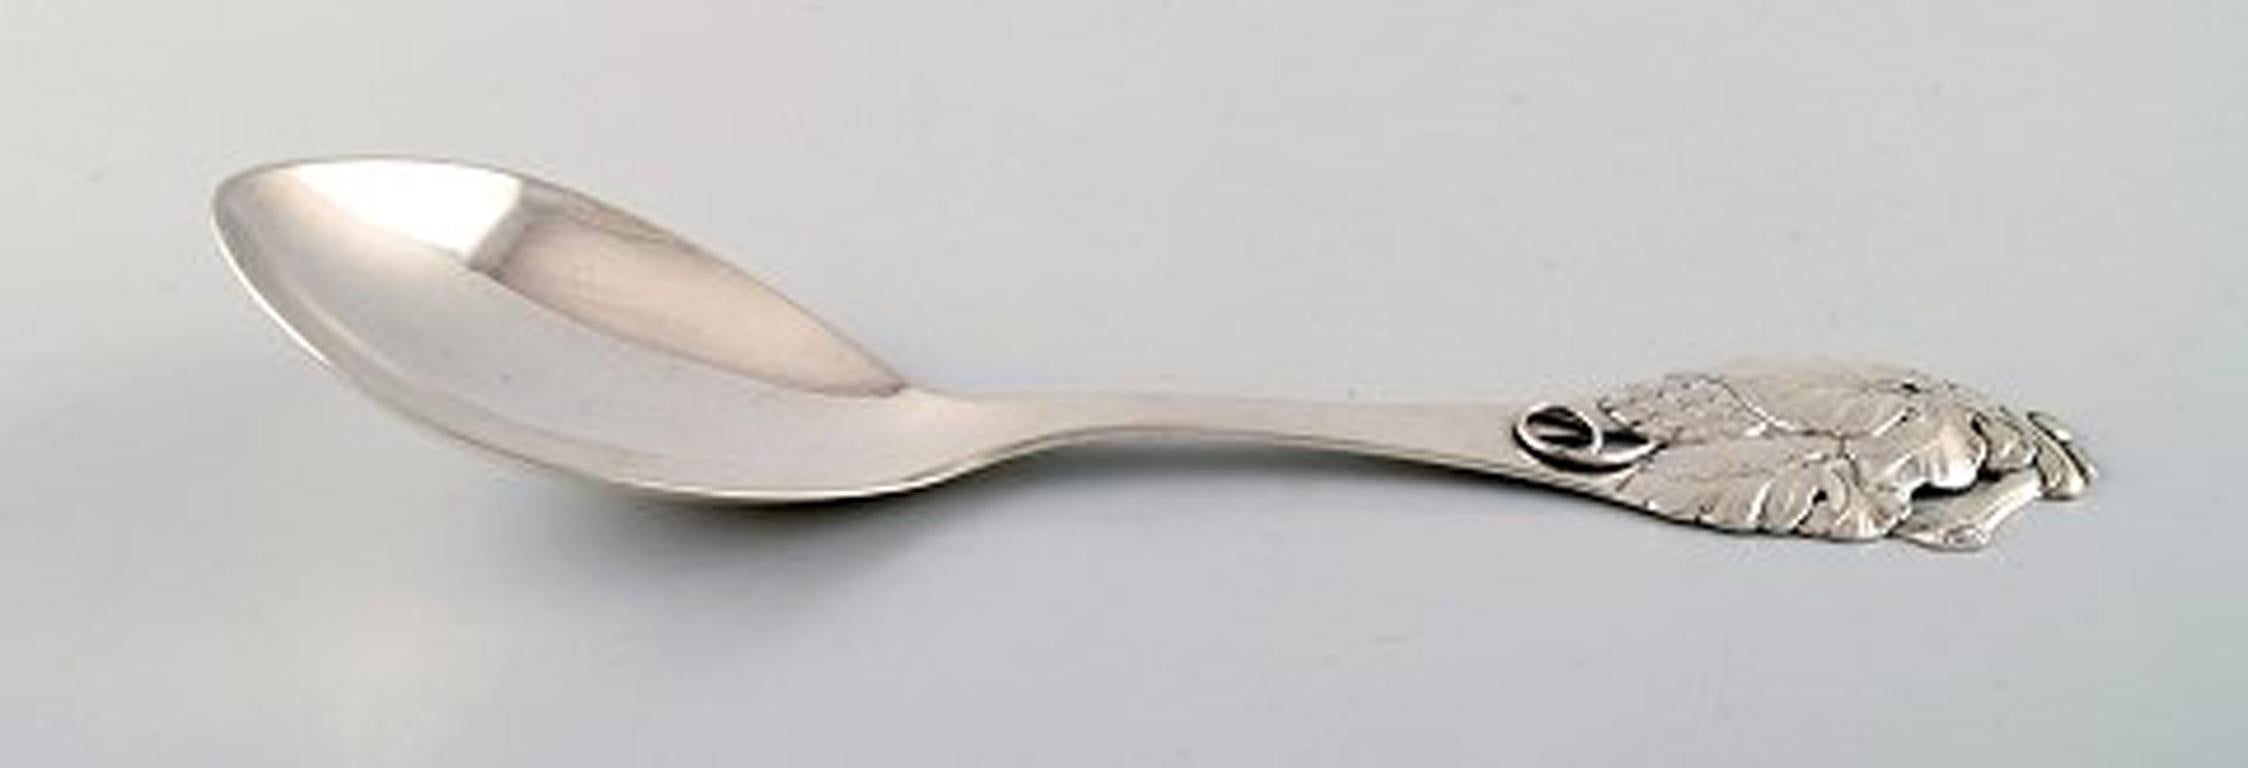 spoon in danish